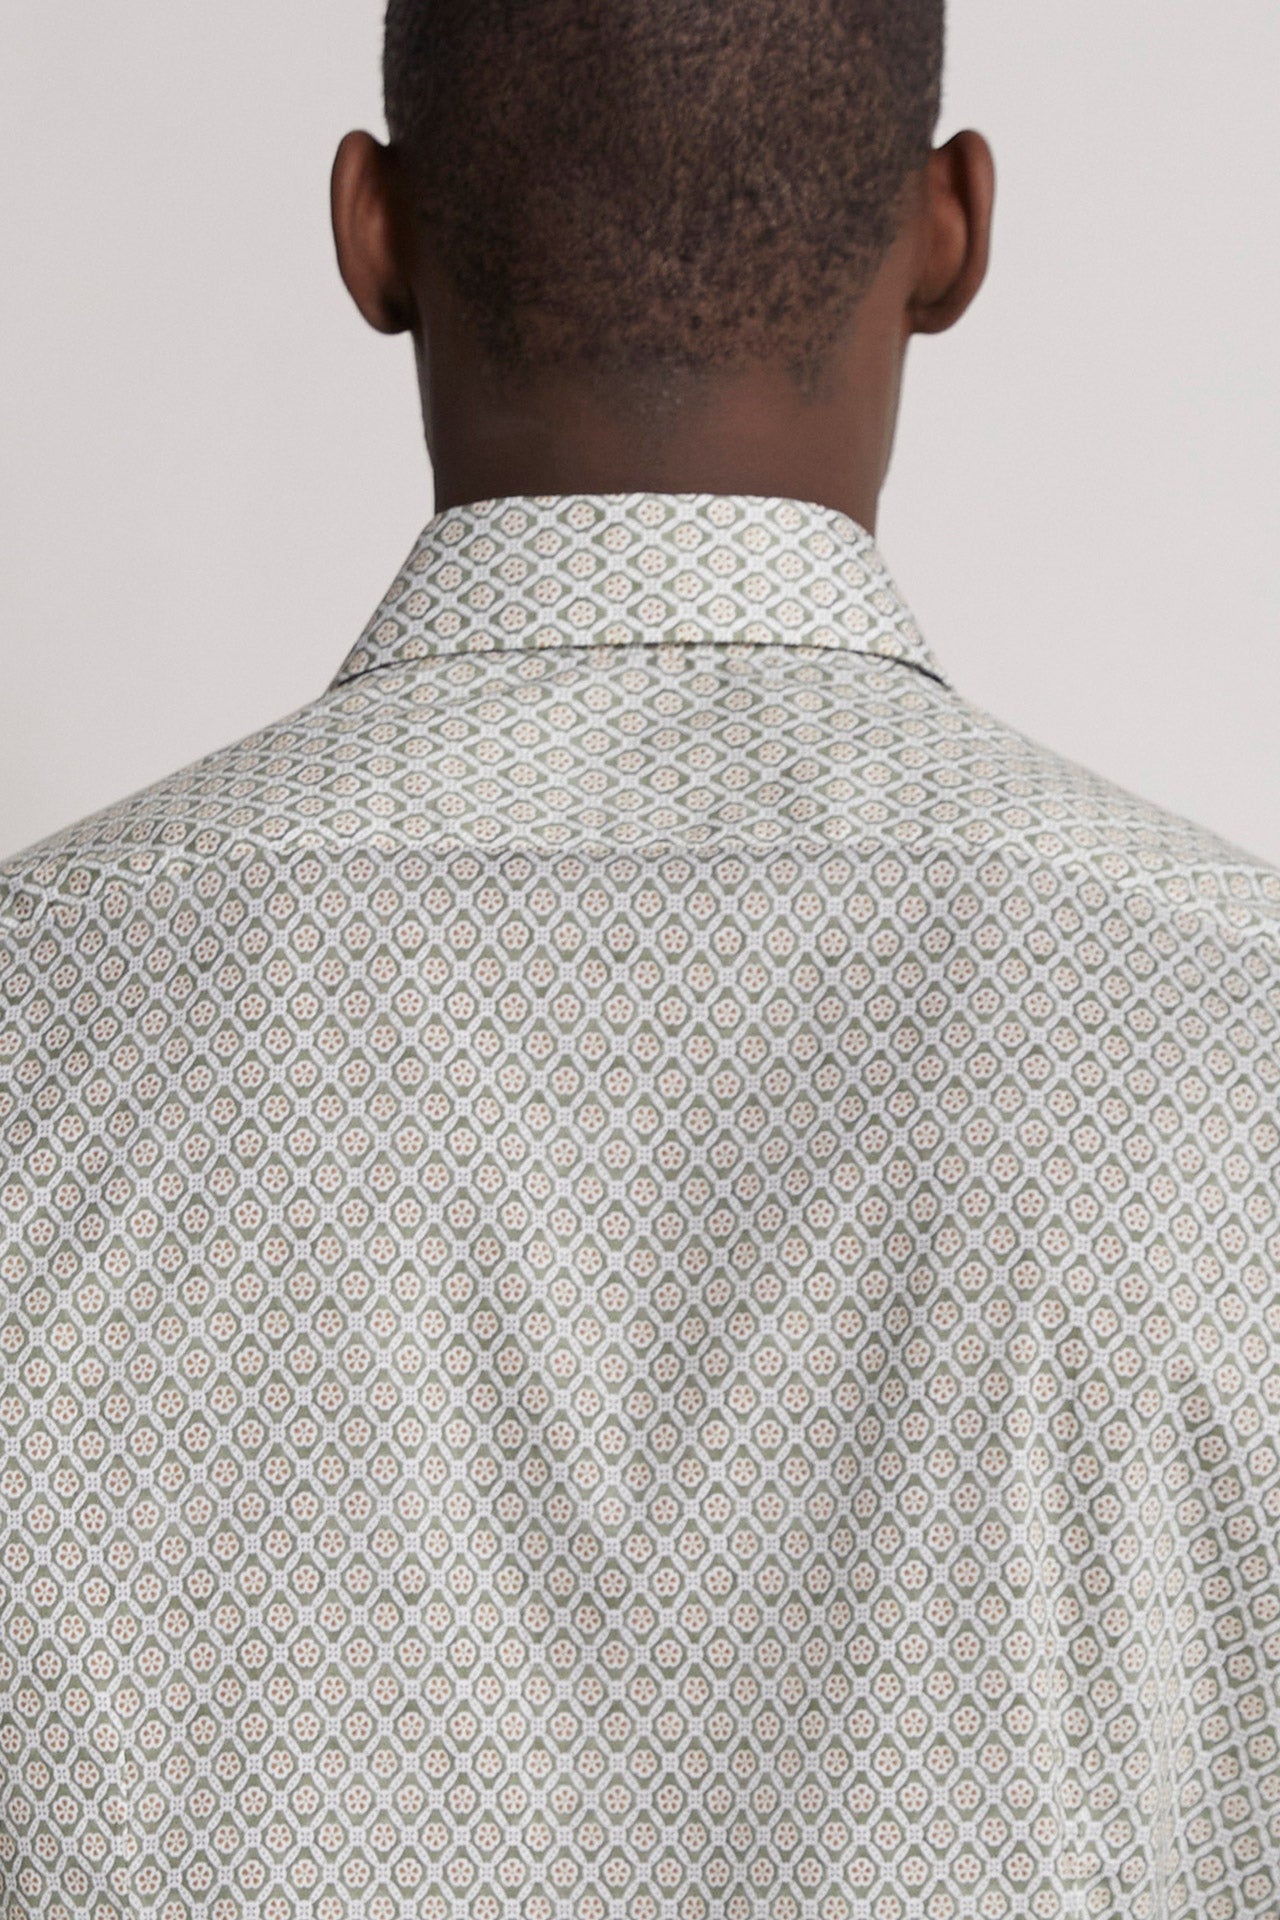 Sean printed panamino shirt - rombo pattern